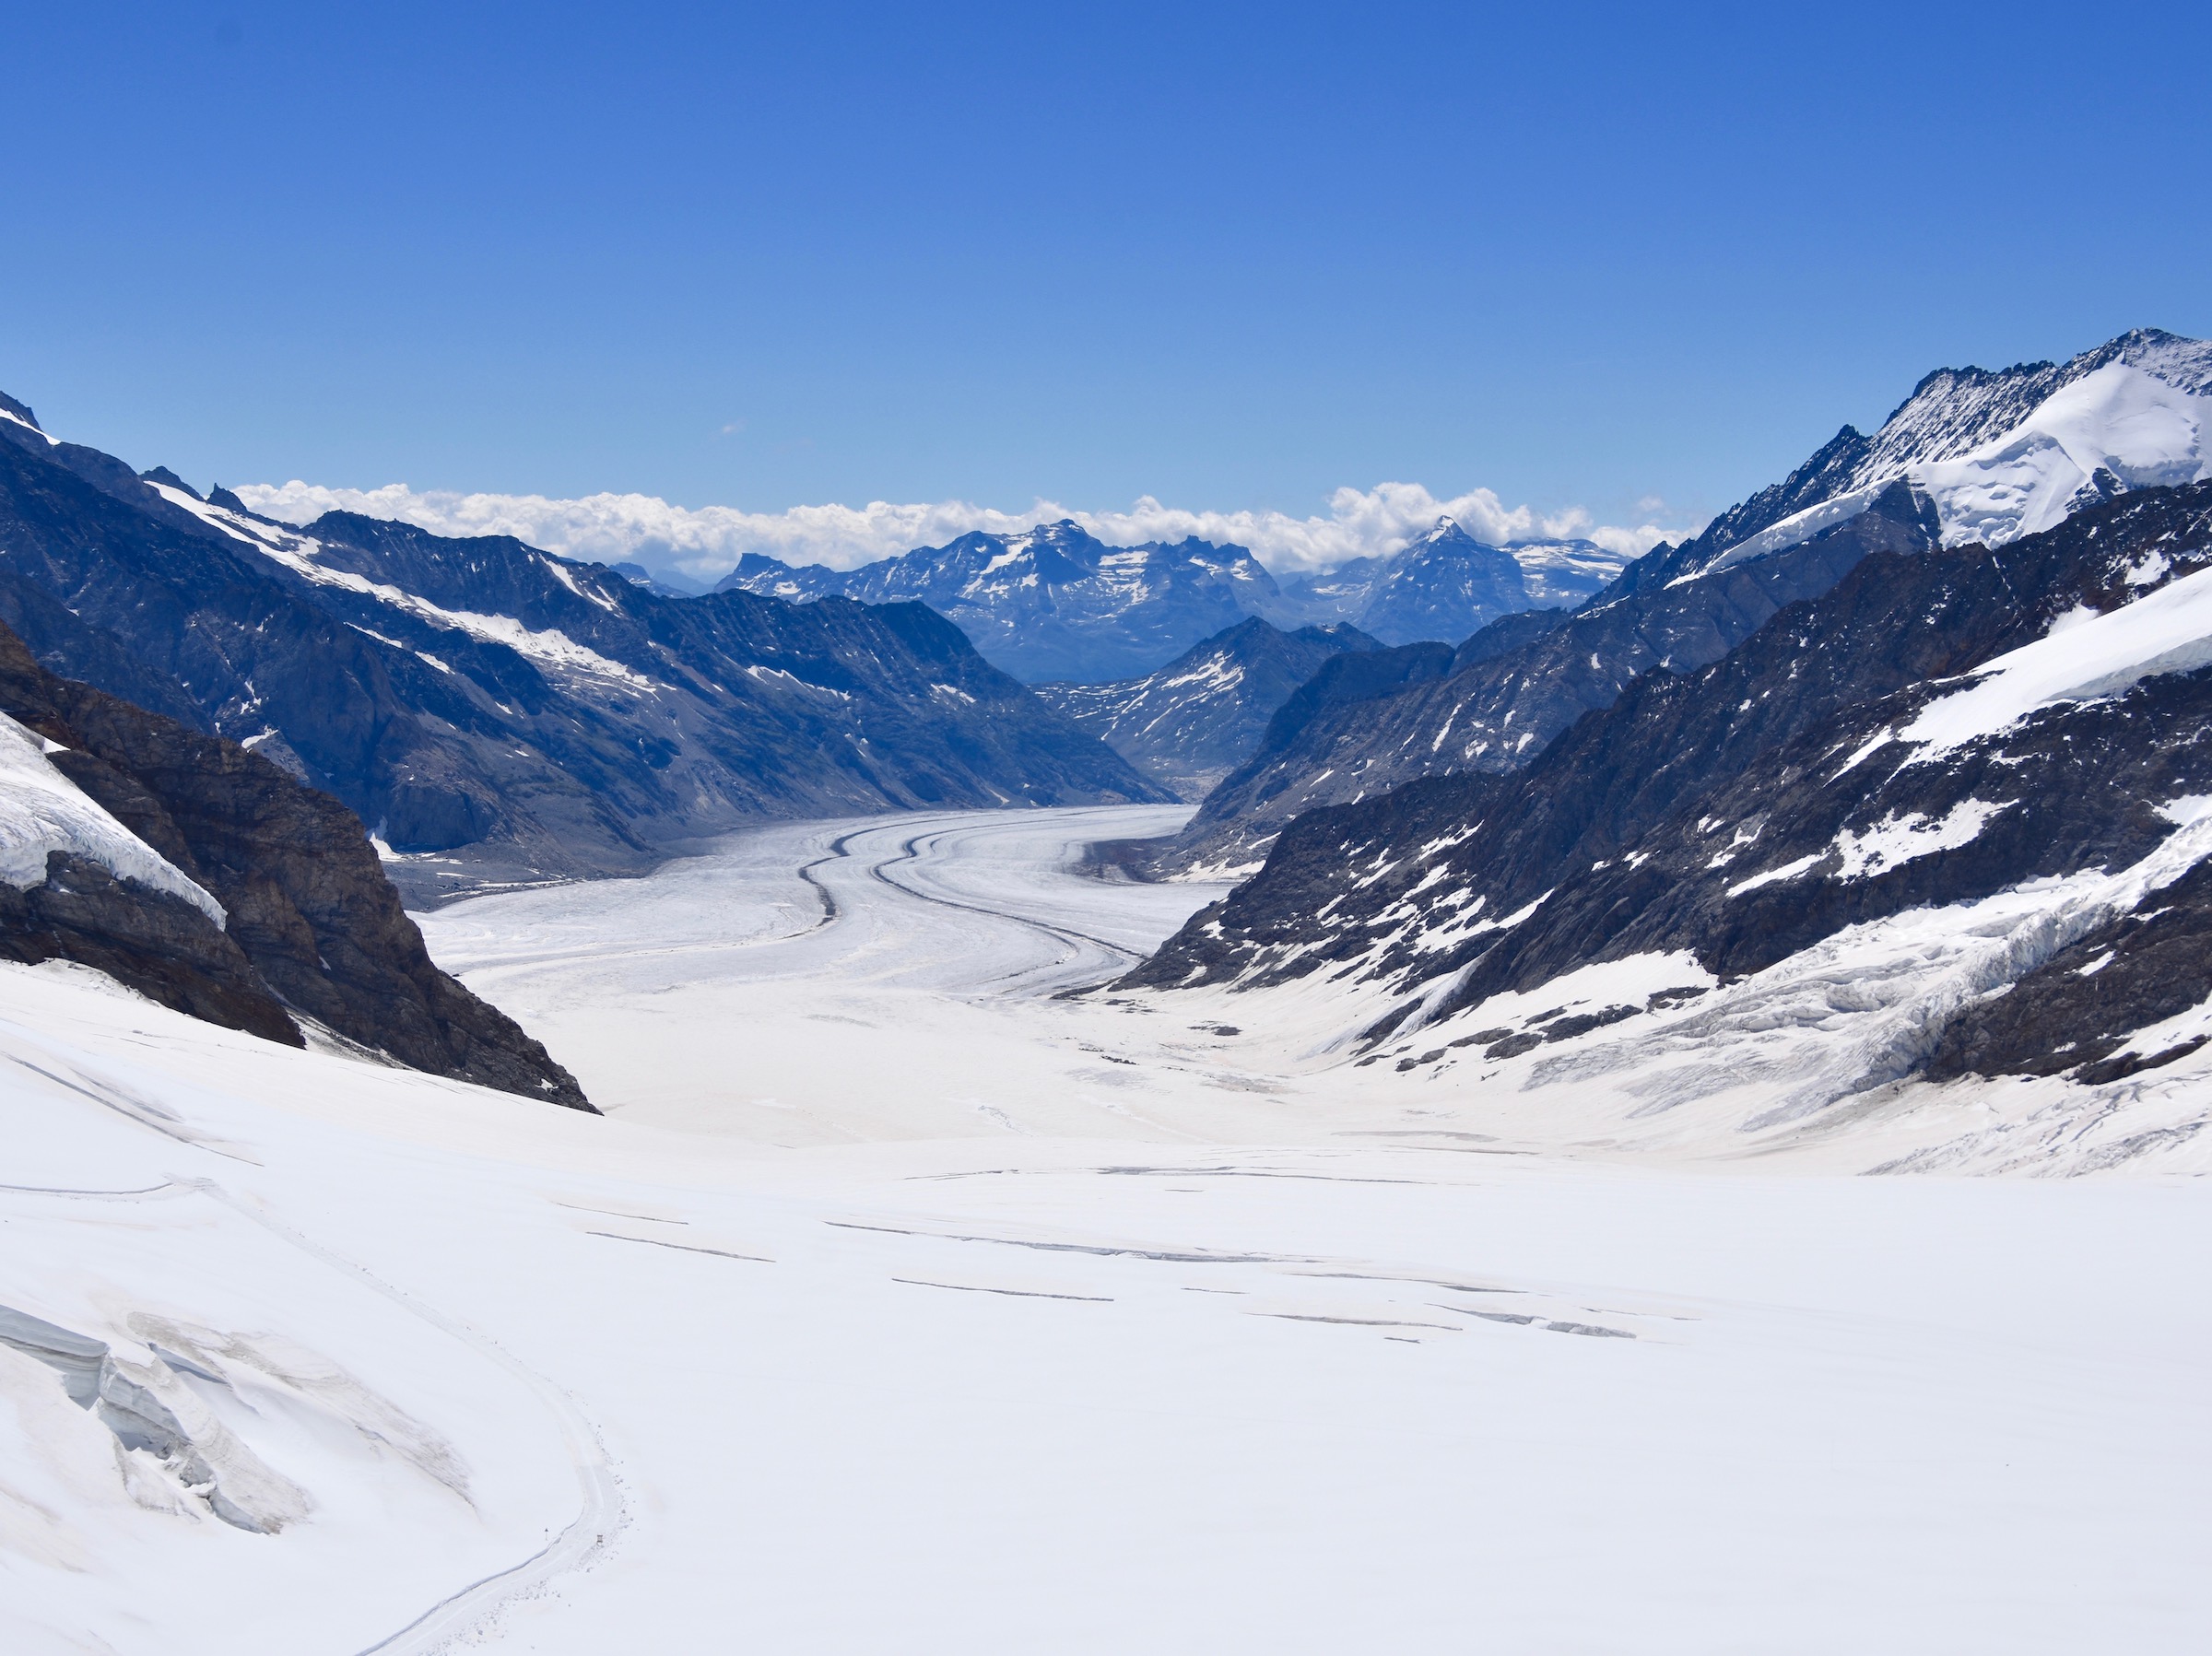 Aletsch Glacier from The Sphinx on Jungfraujoch